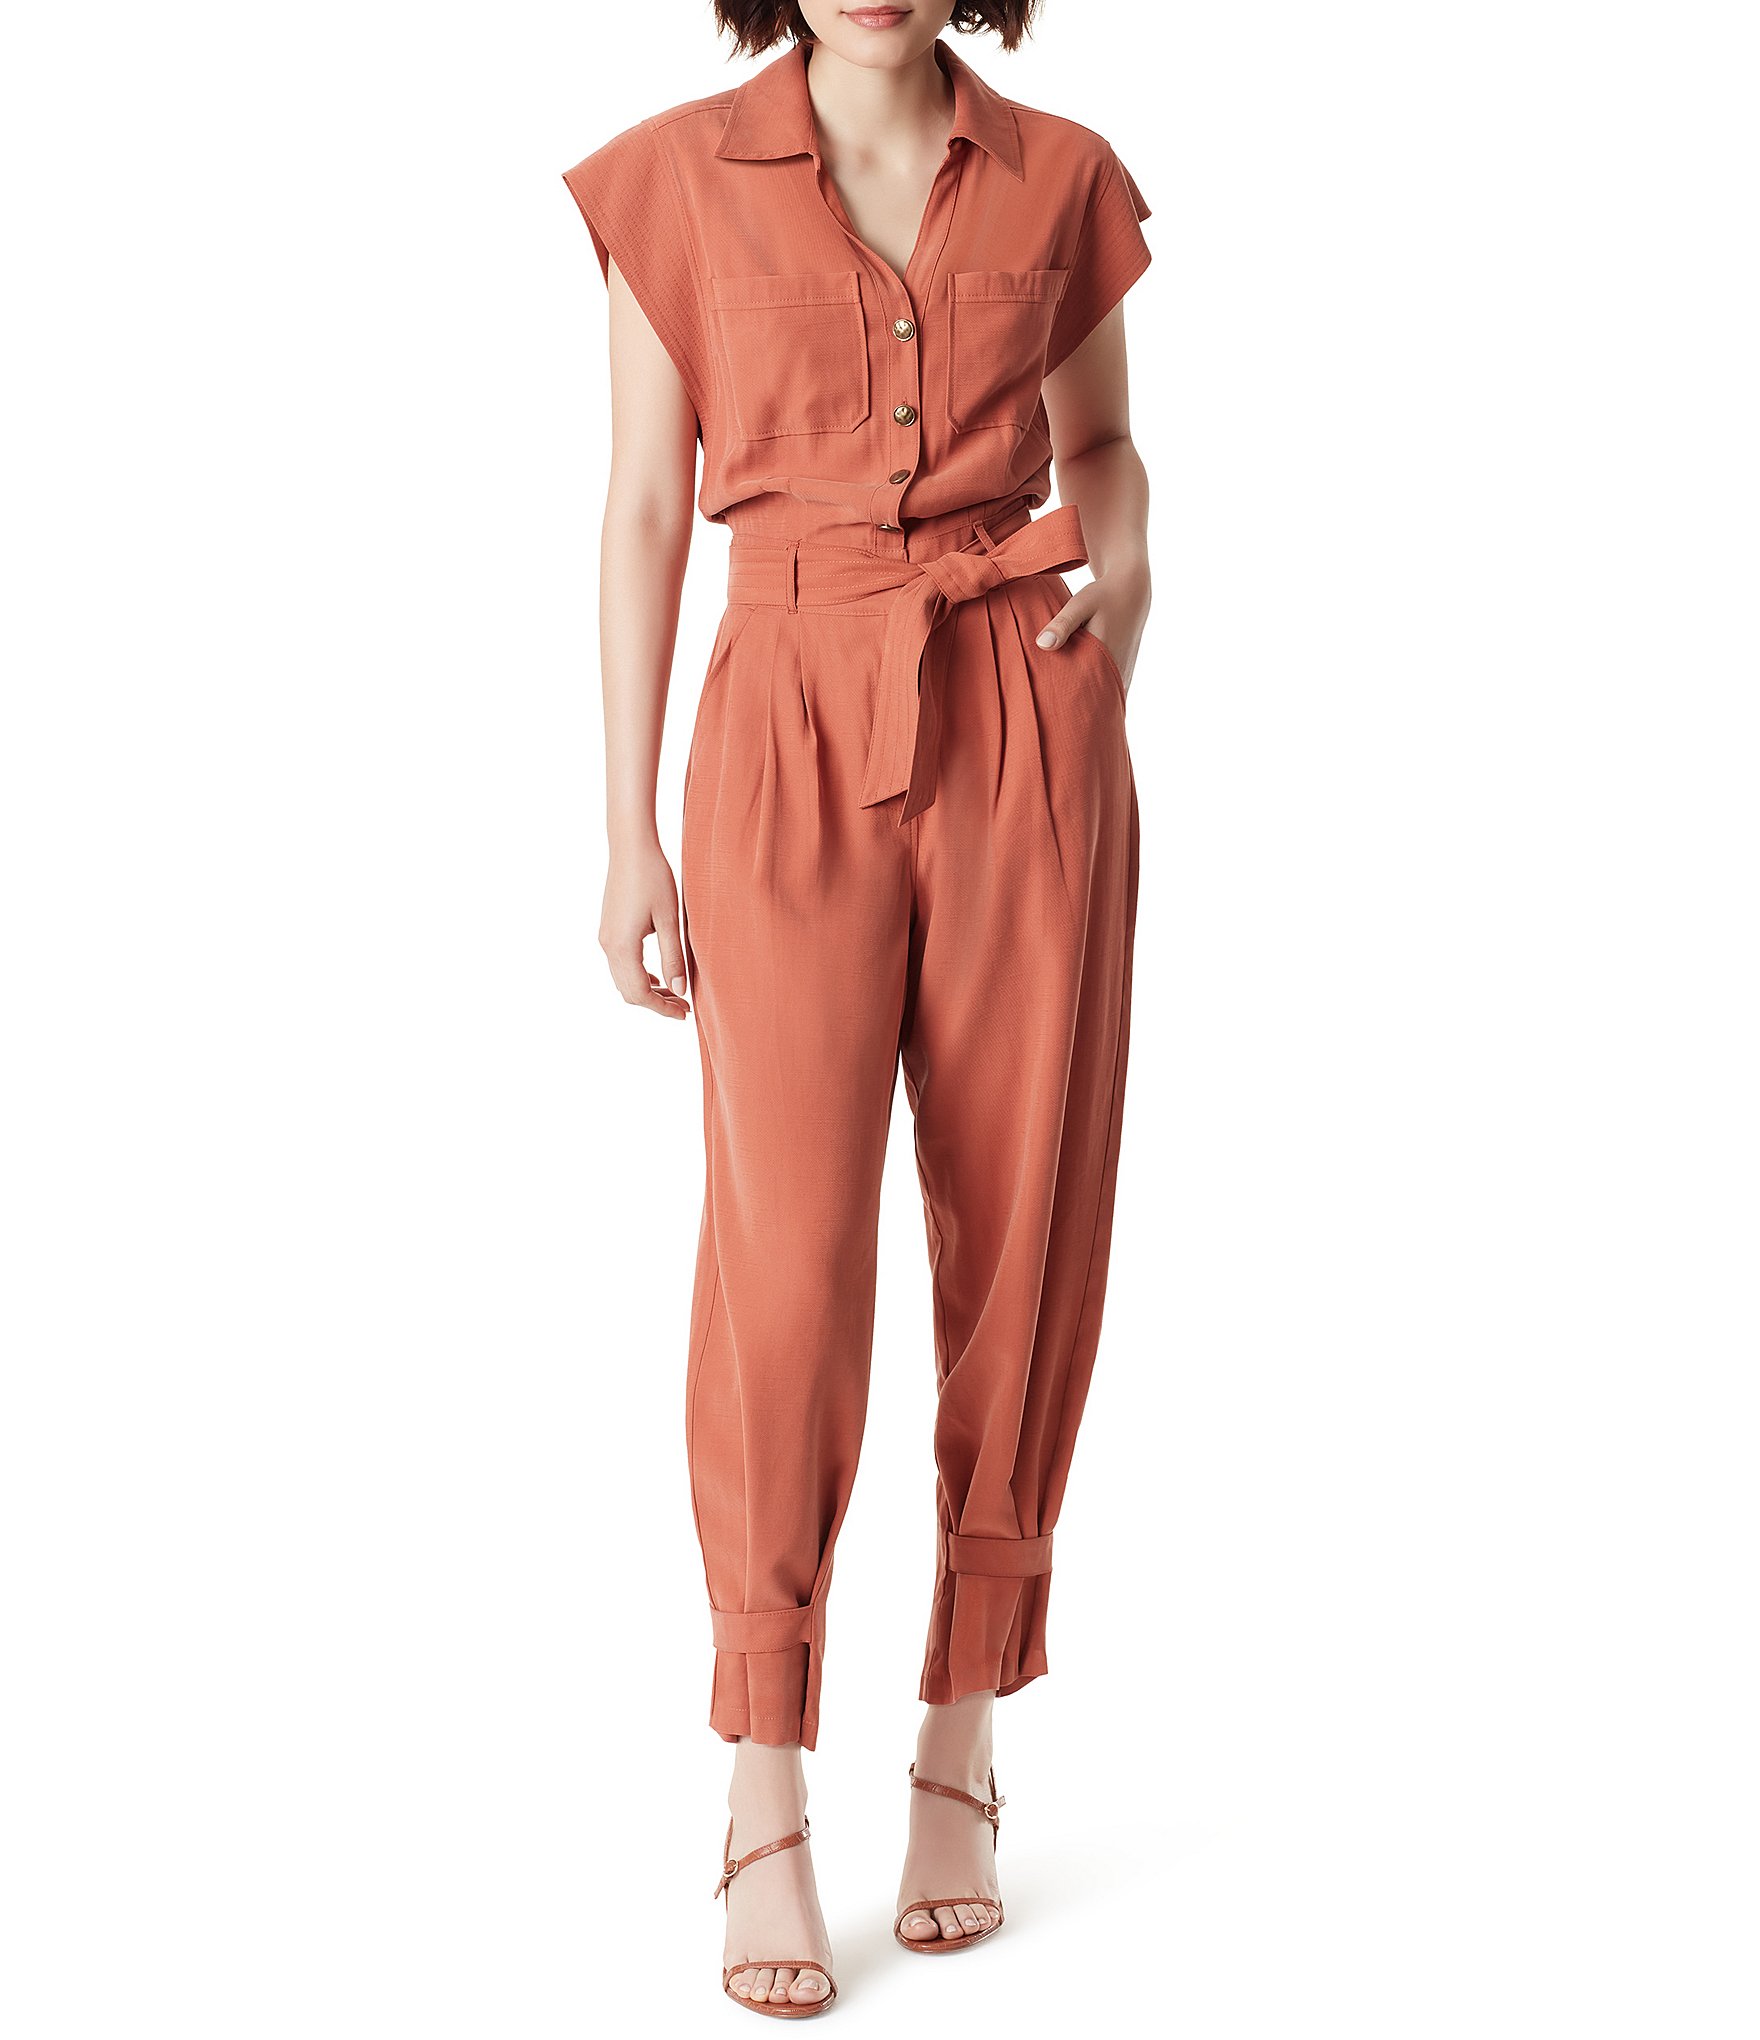 Buy Women Solid Regular Fit Orange Jumpsuit Online - 760015